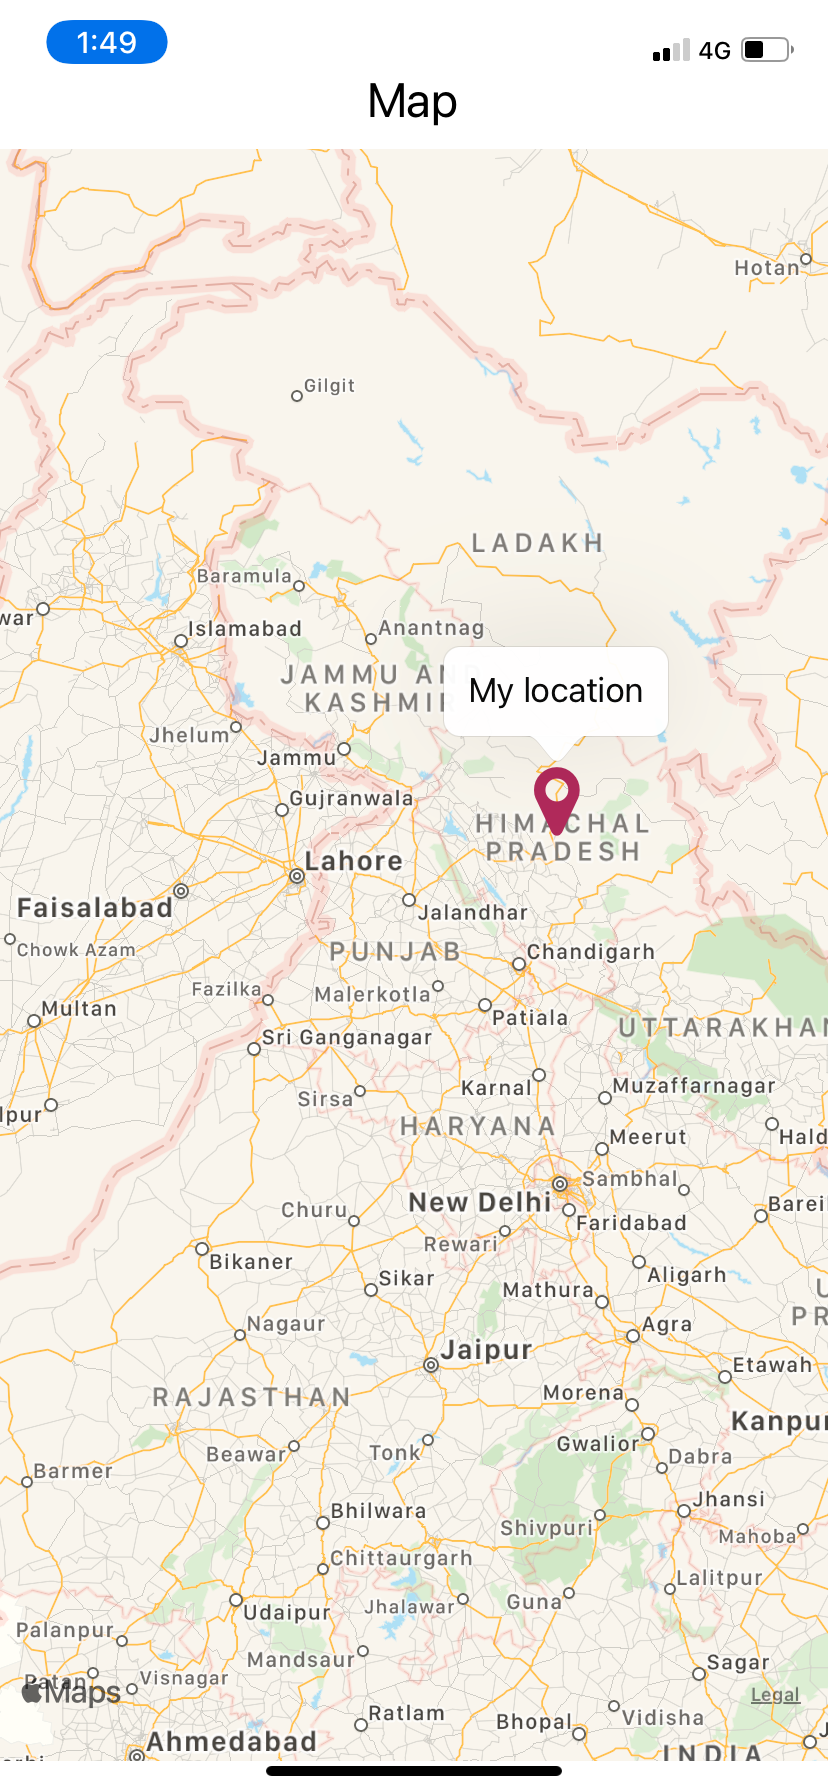 Working with Maps in React Native | by shrey vijayvargiya | JavaScript in  Plain English